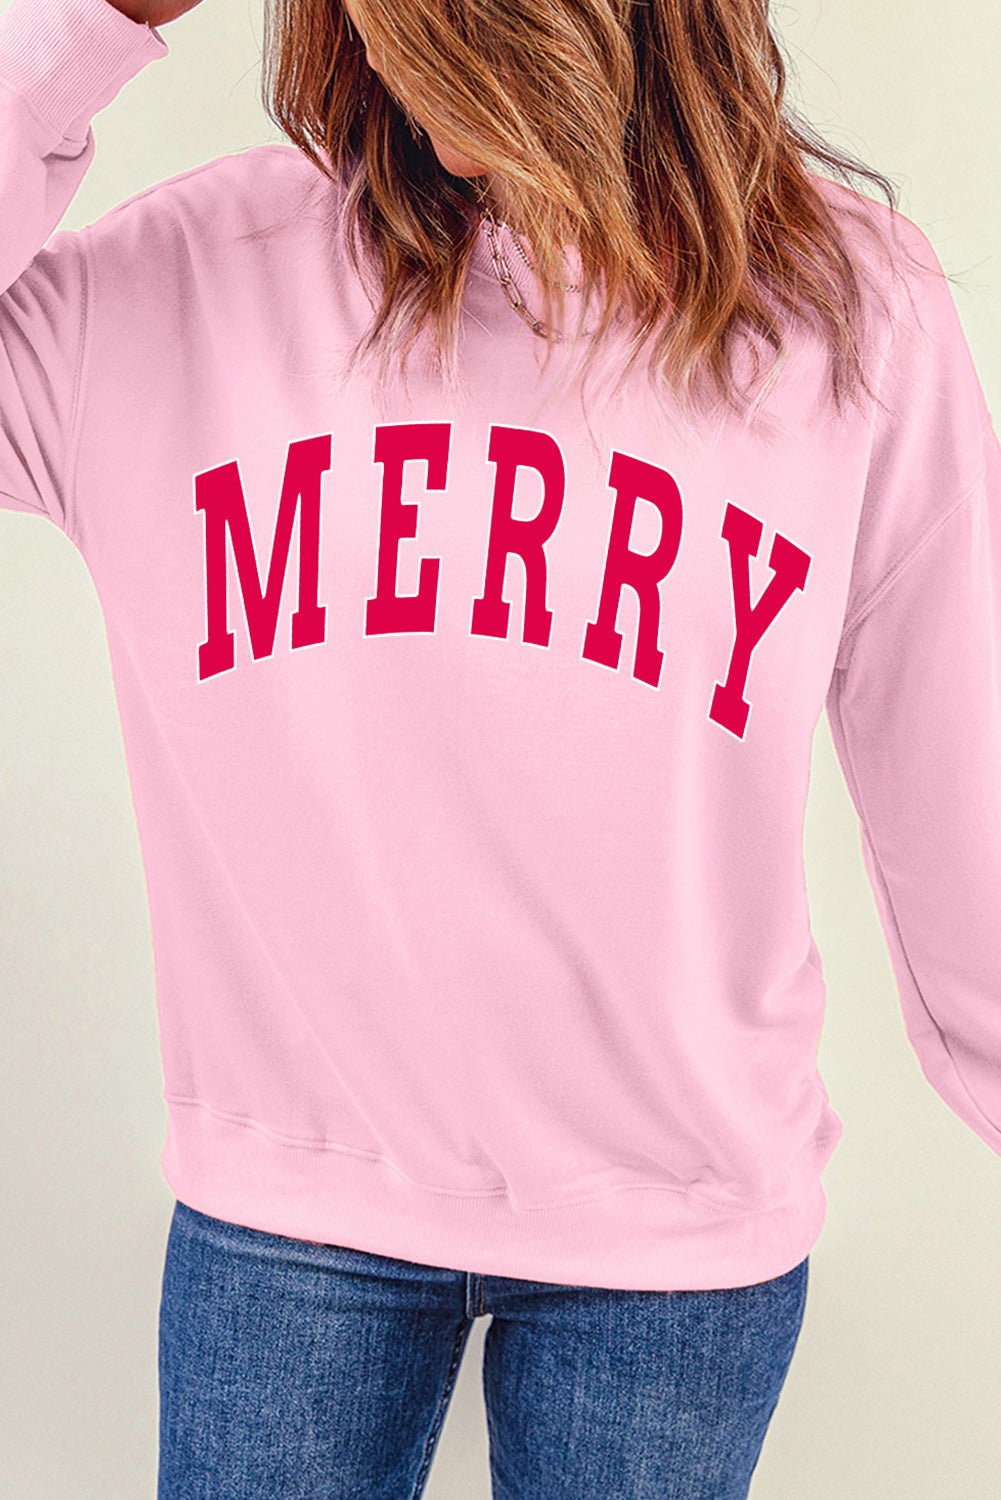 Pink MERRY Alphabet Print Loose Fit Christmas Sweatshirt